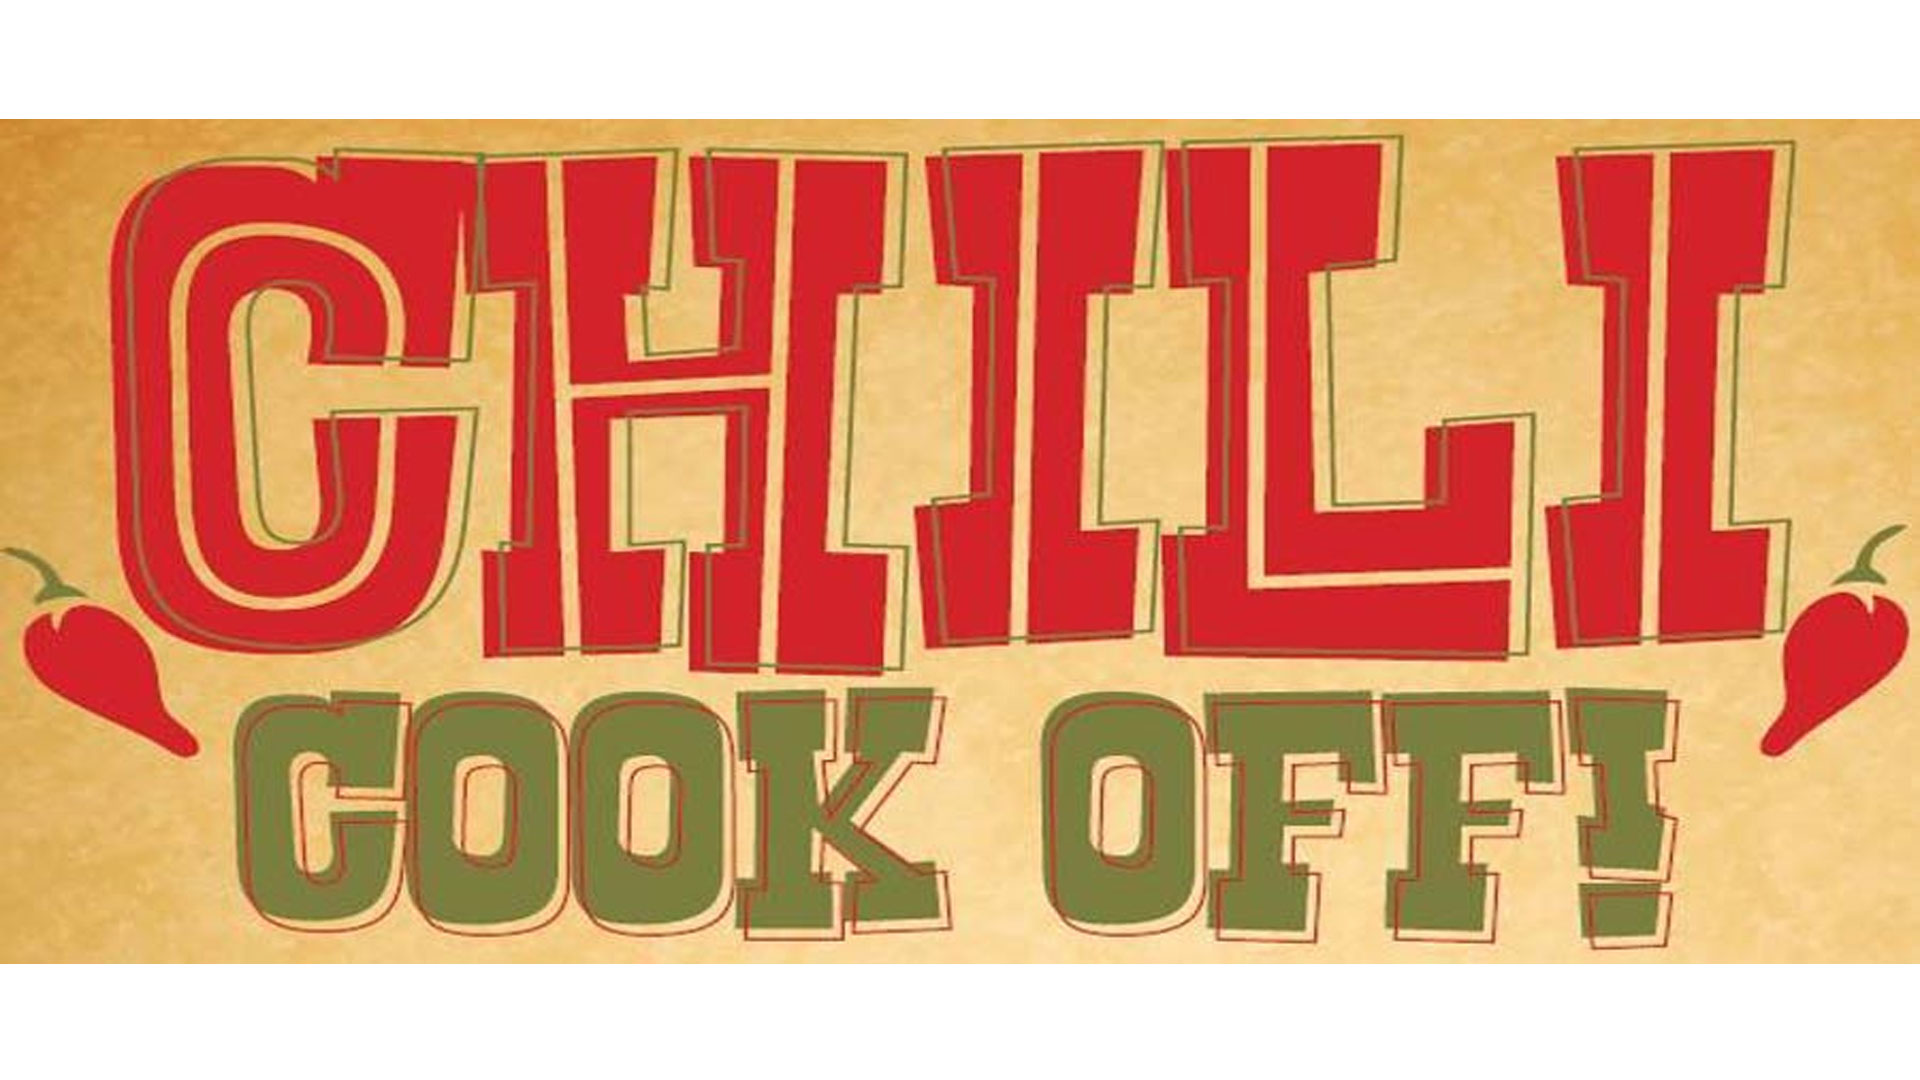 Texas Chili CookOff!! Good News!